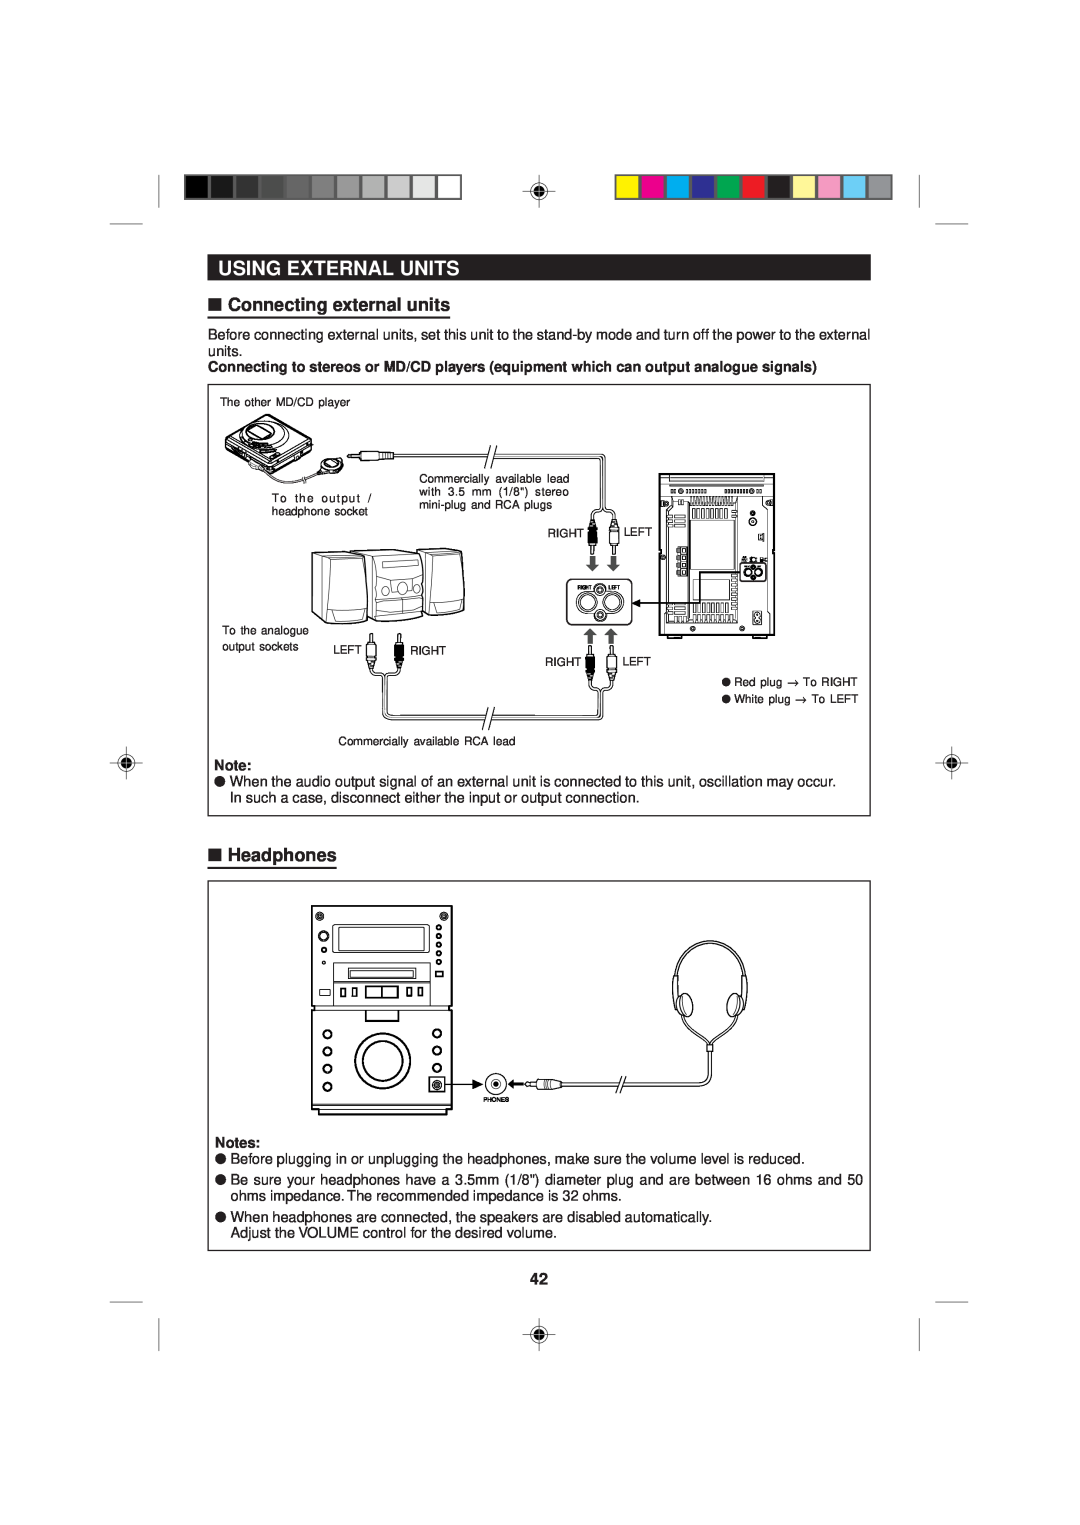 Sharp MD-M1H operation manual Using External Units, Connecting external units, Headphones 